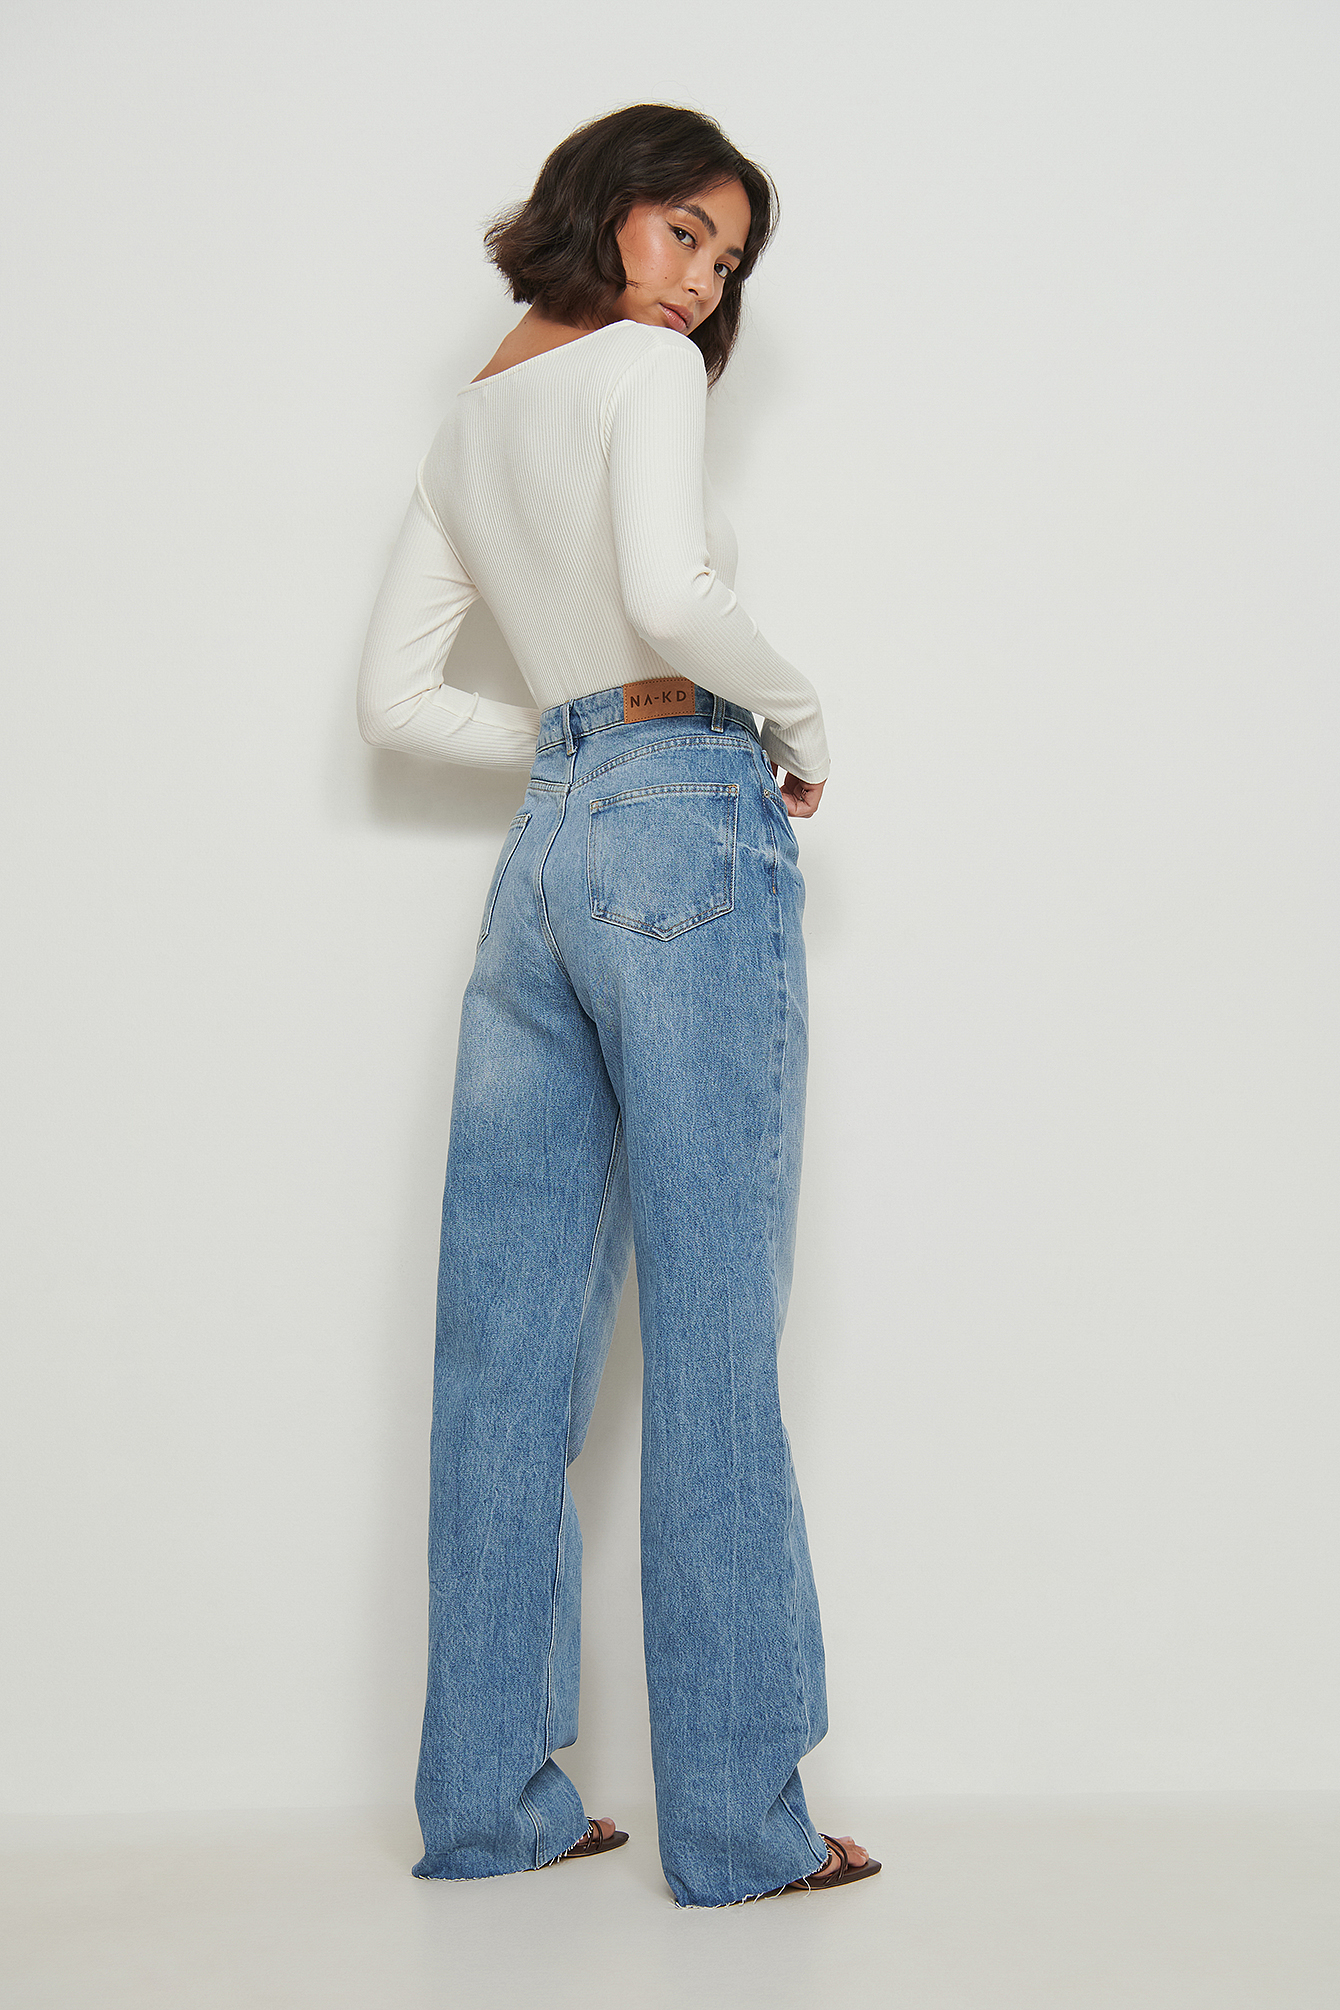 Light Blue Økologiske jeans med en høy midje, brede bein og en rå linning